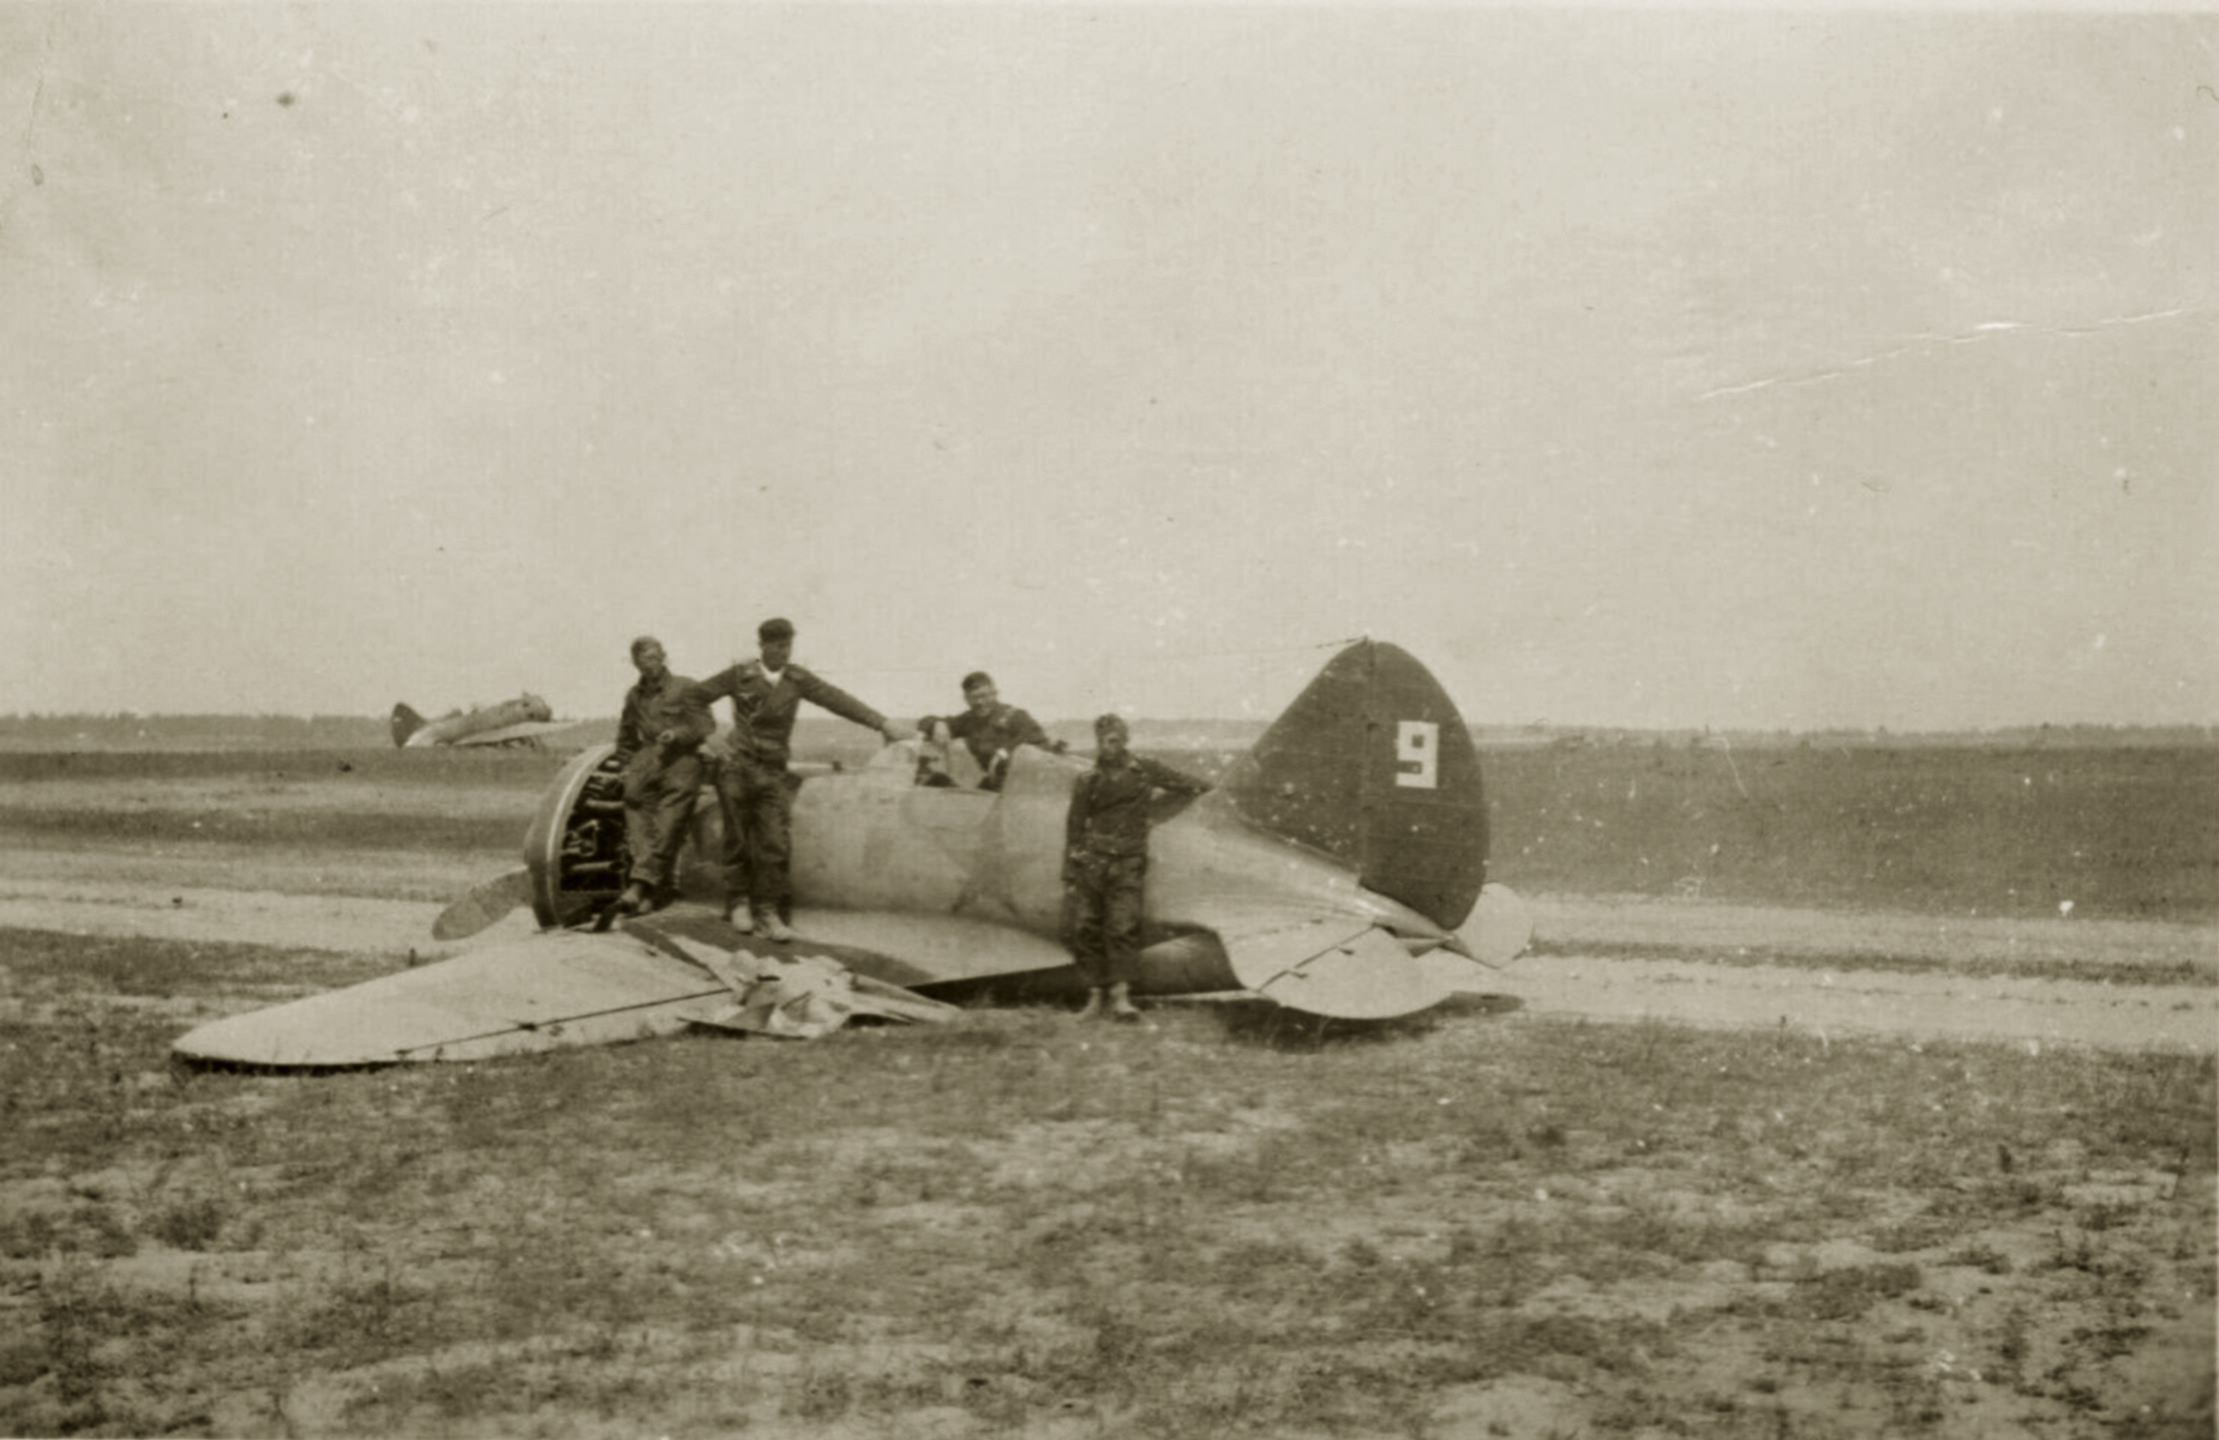 Polikarpov I 16 White 9 force landed being inspected by German personnel Steppe Ukraine Barbarosa 1941 ebay 01